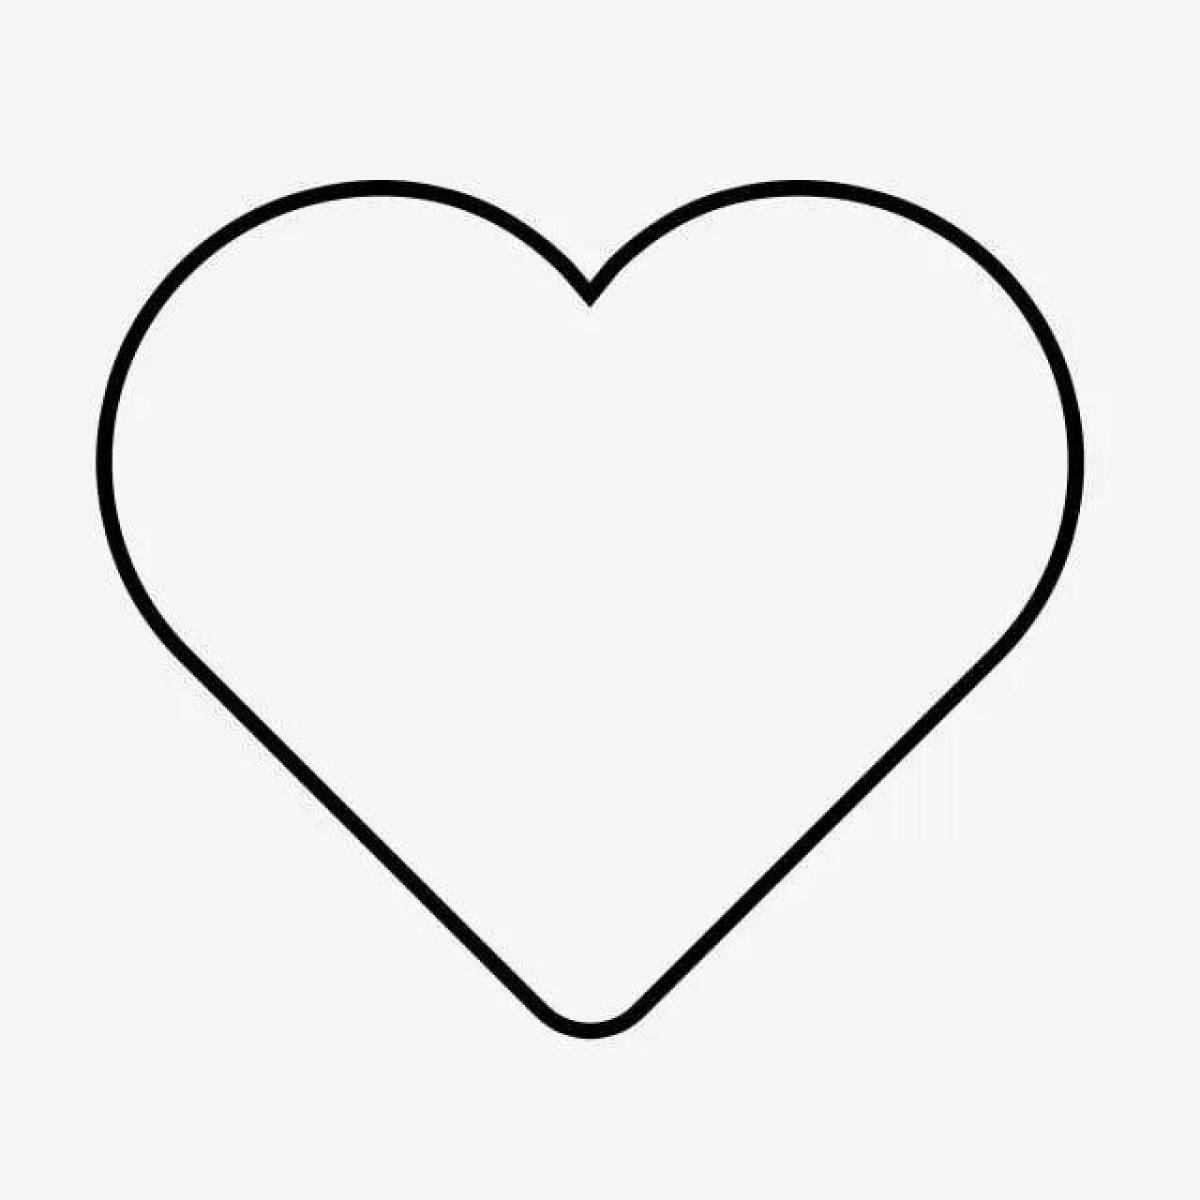 Tik tok hearts live coloring page